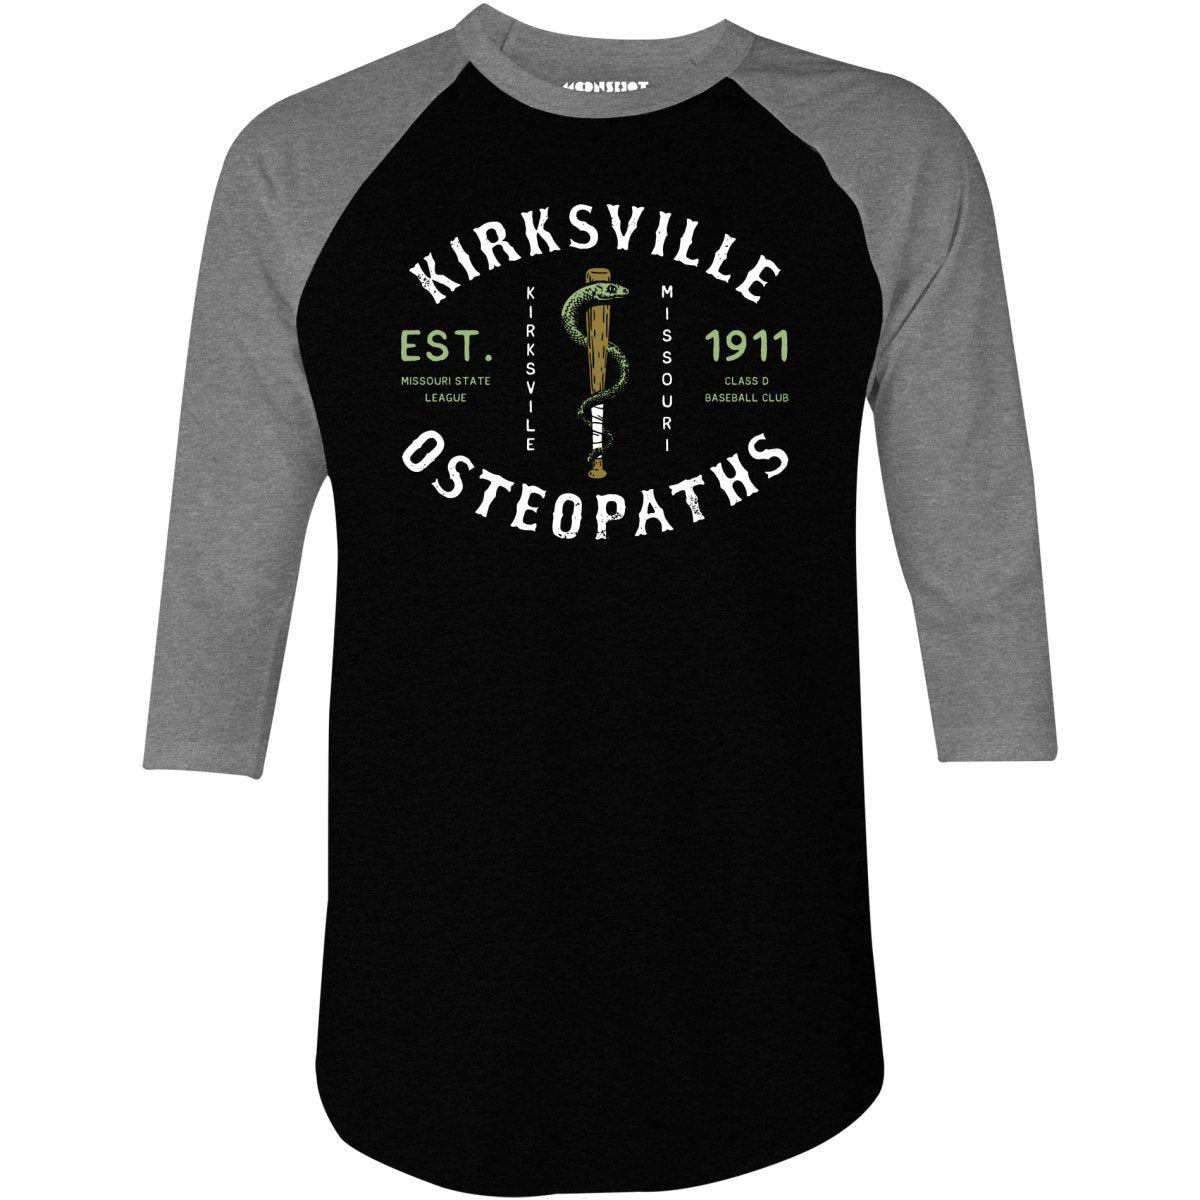 Kirksville Osteopaths - Missouri - Vintage Defunct Baseball Teams - 3/4 Sleeve Raglan T-Shirt